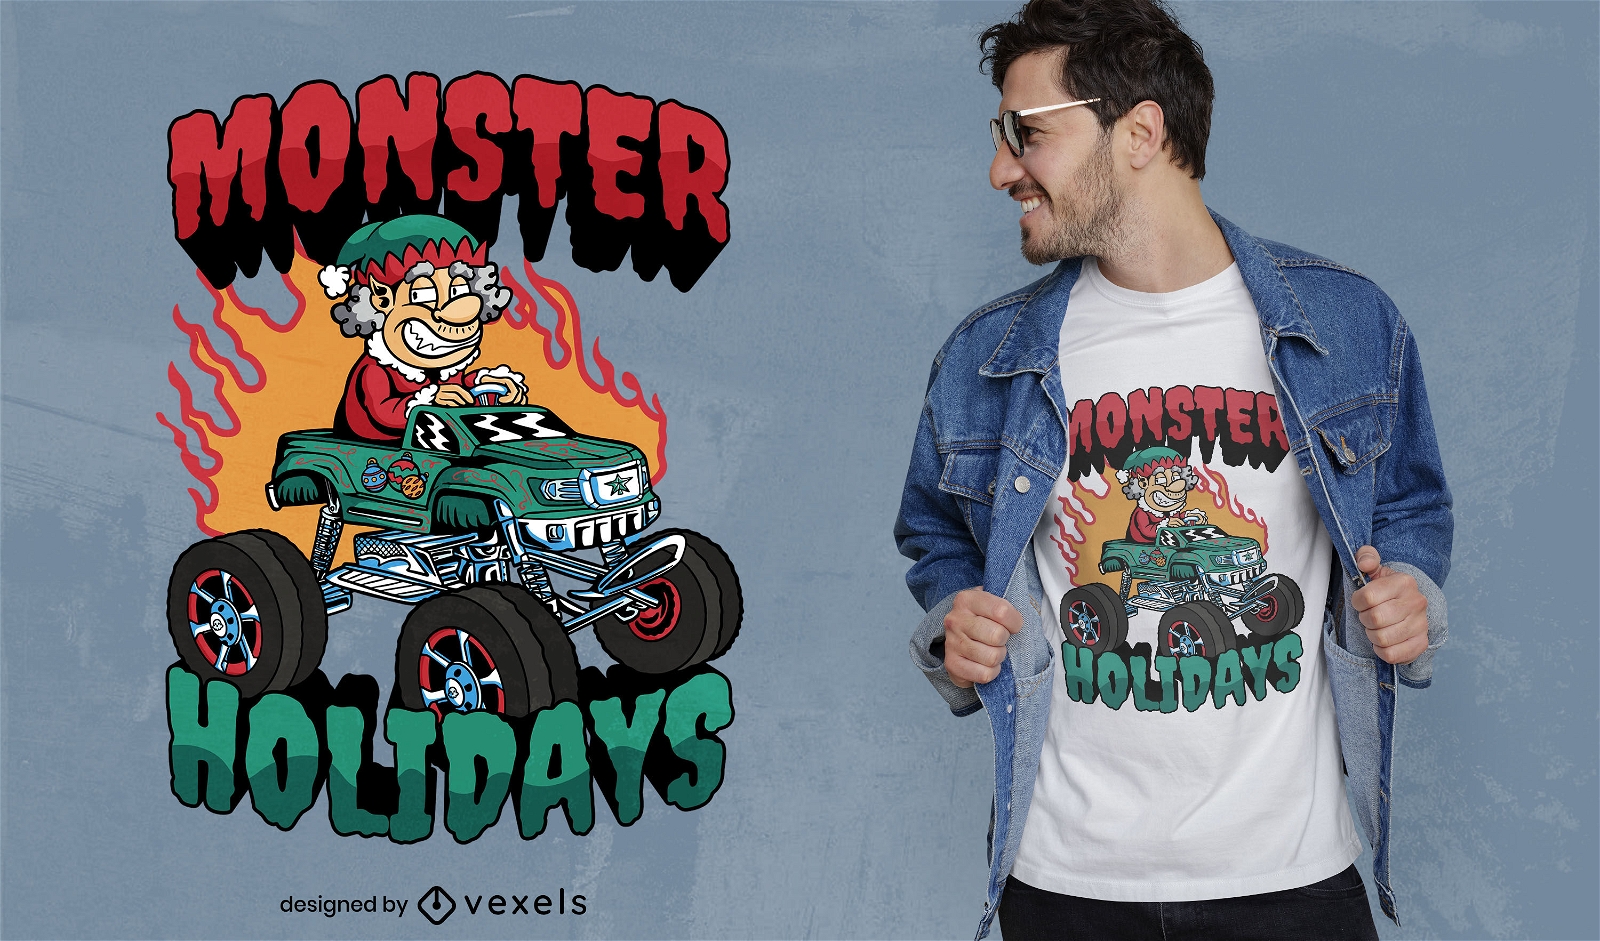 Monster holidays Christmas t-shirt design